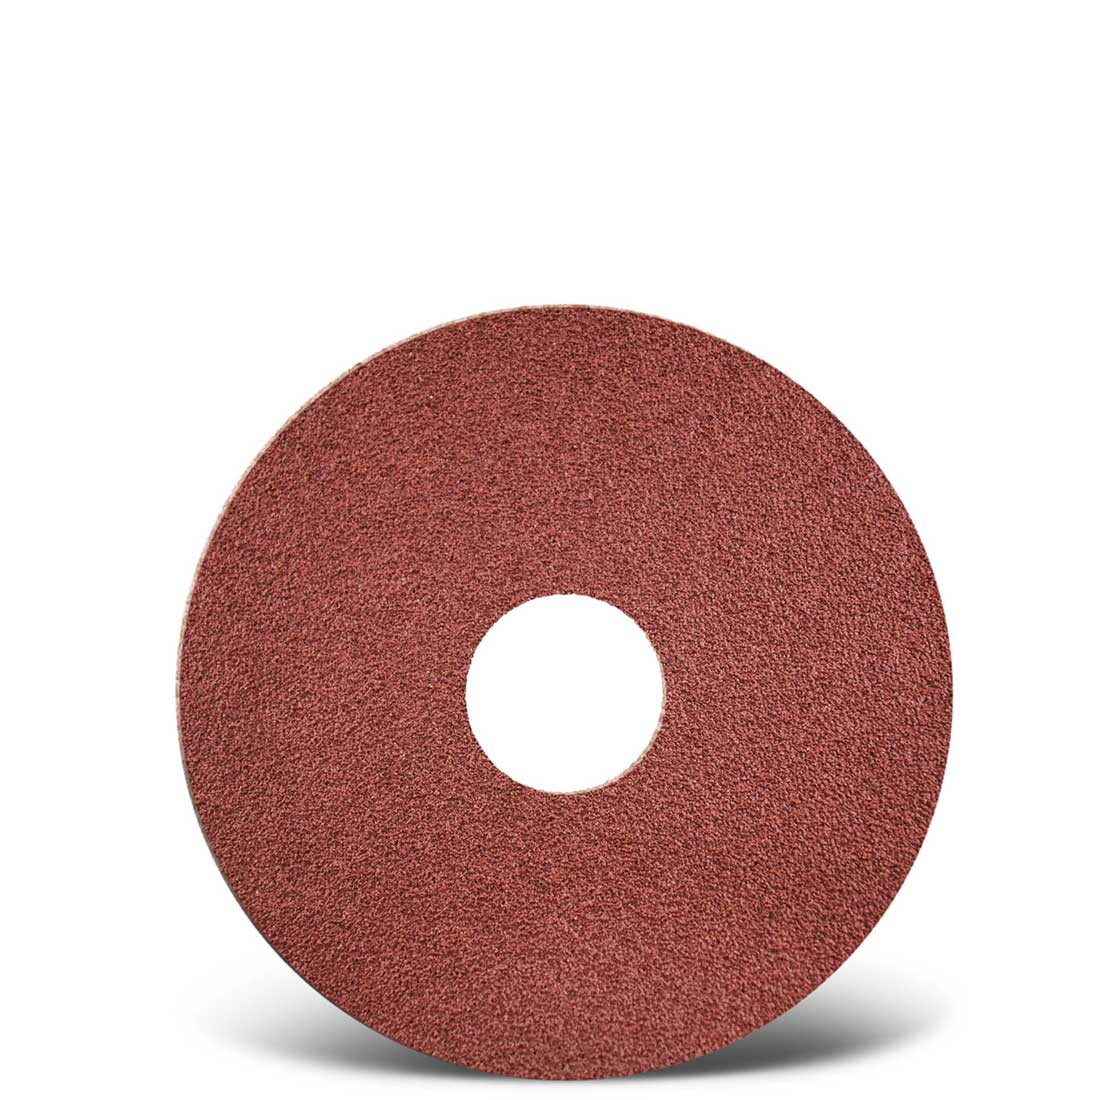 MENZER dual sanding discs for orbital floor sanders, G16–120, Ø 375 mm / doublesided / aluminium oxide